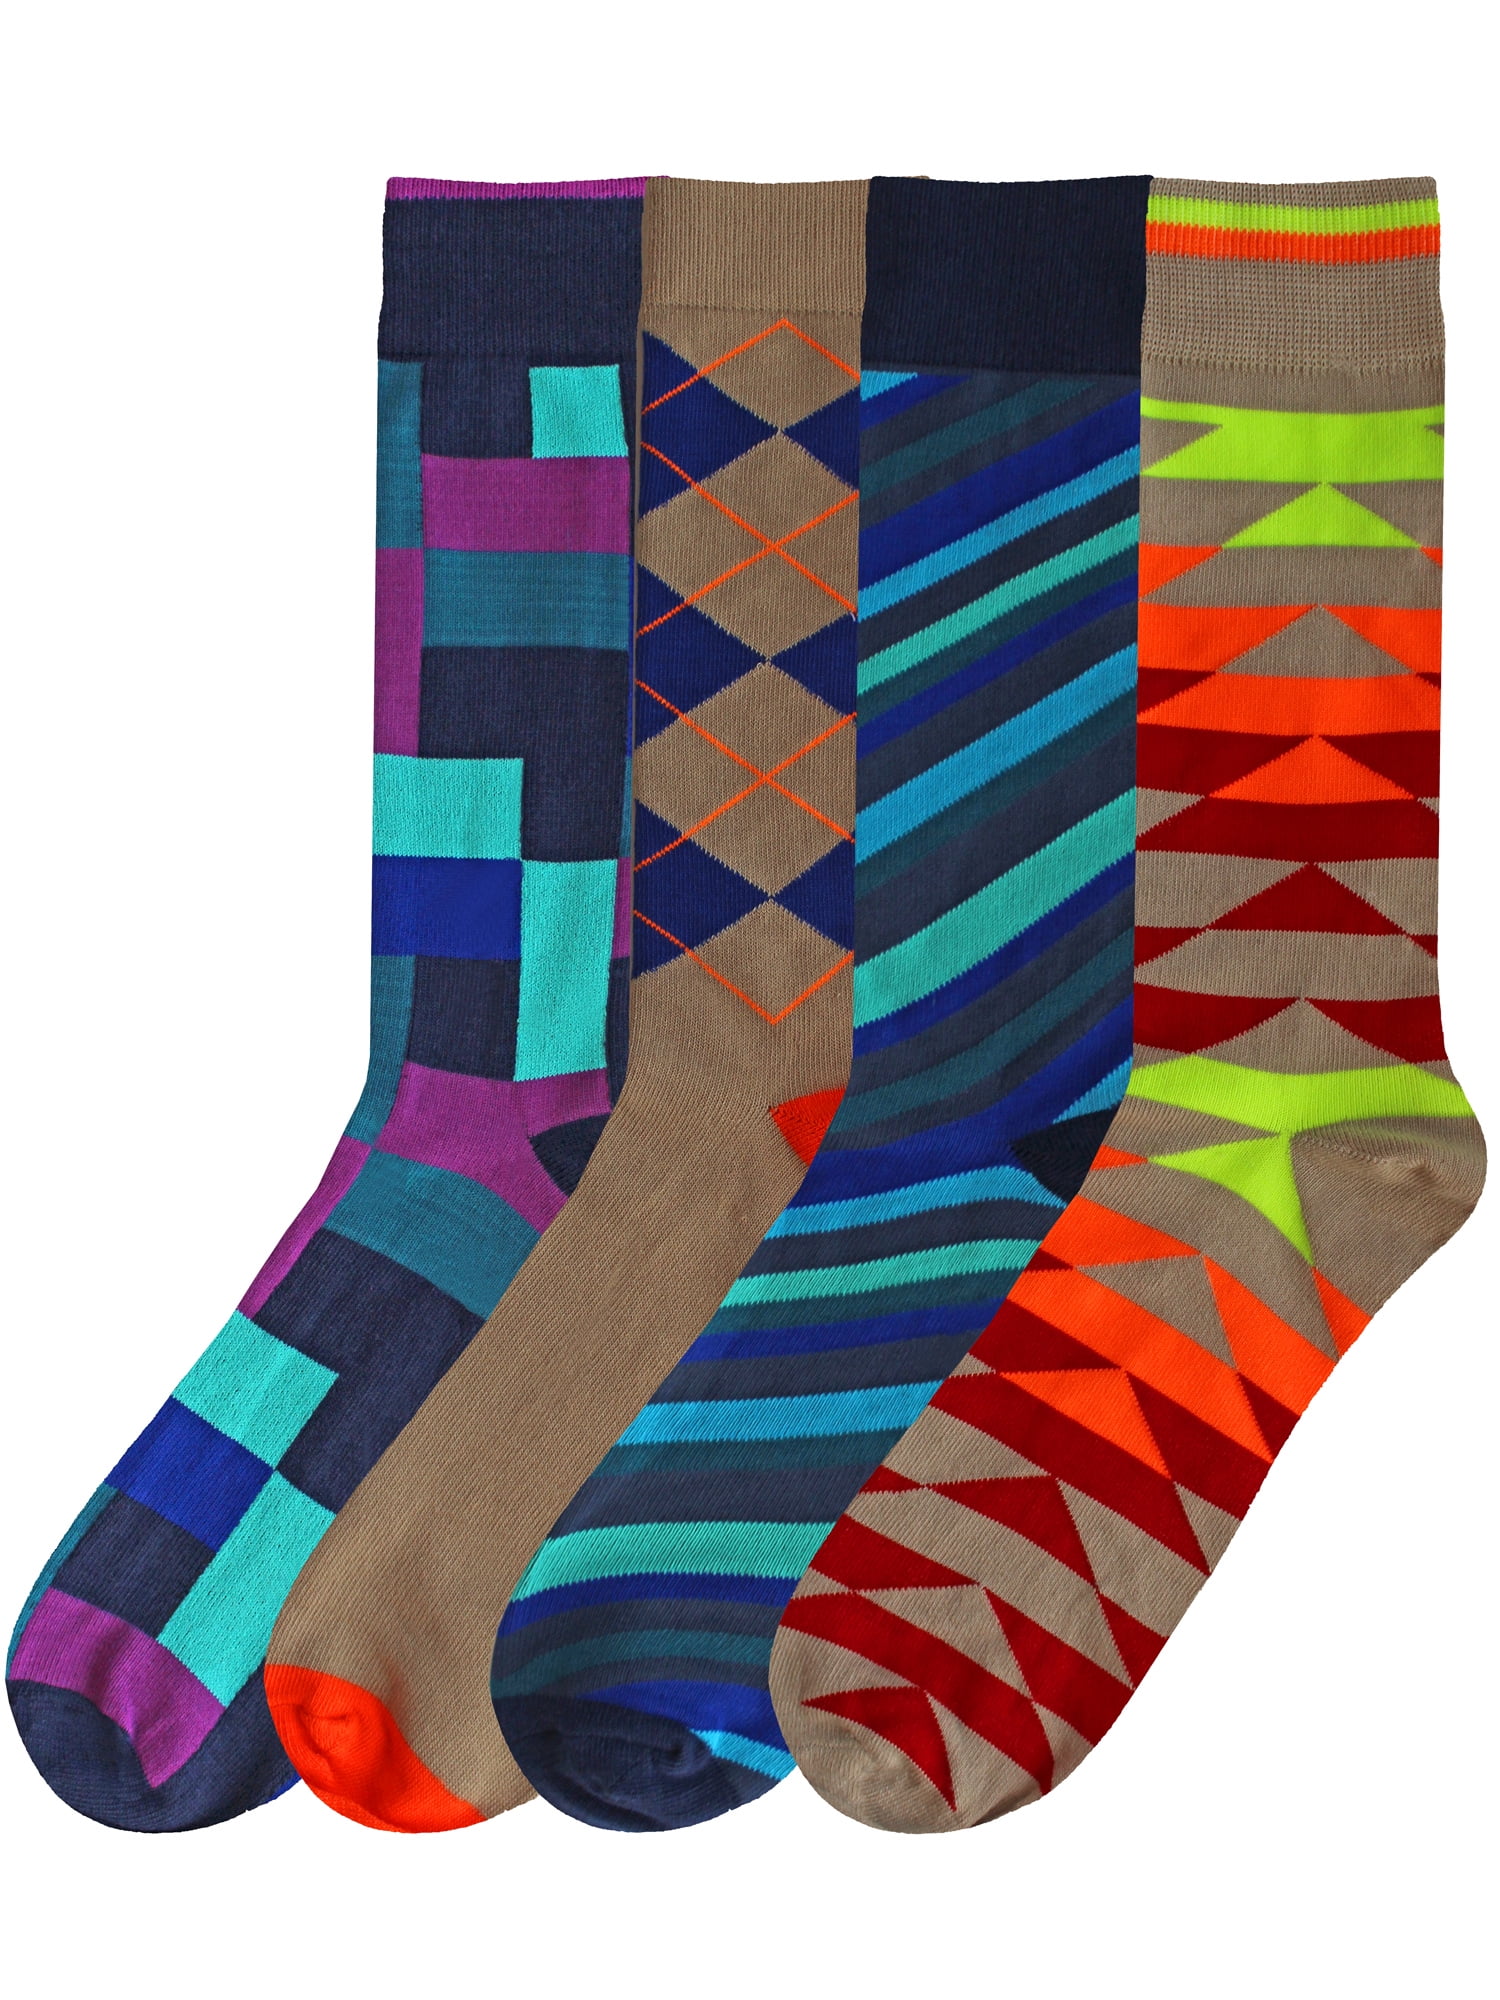 Mens Colorful Novelty Crazy Combo 4-Pack Dress Socks - Walmart.com